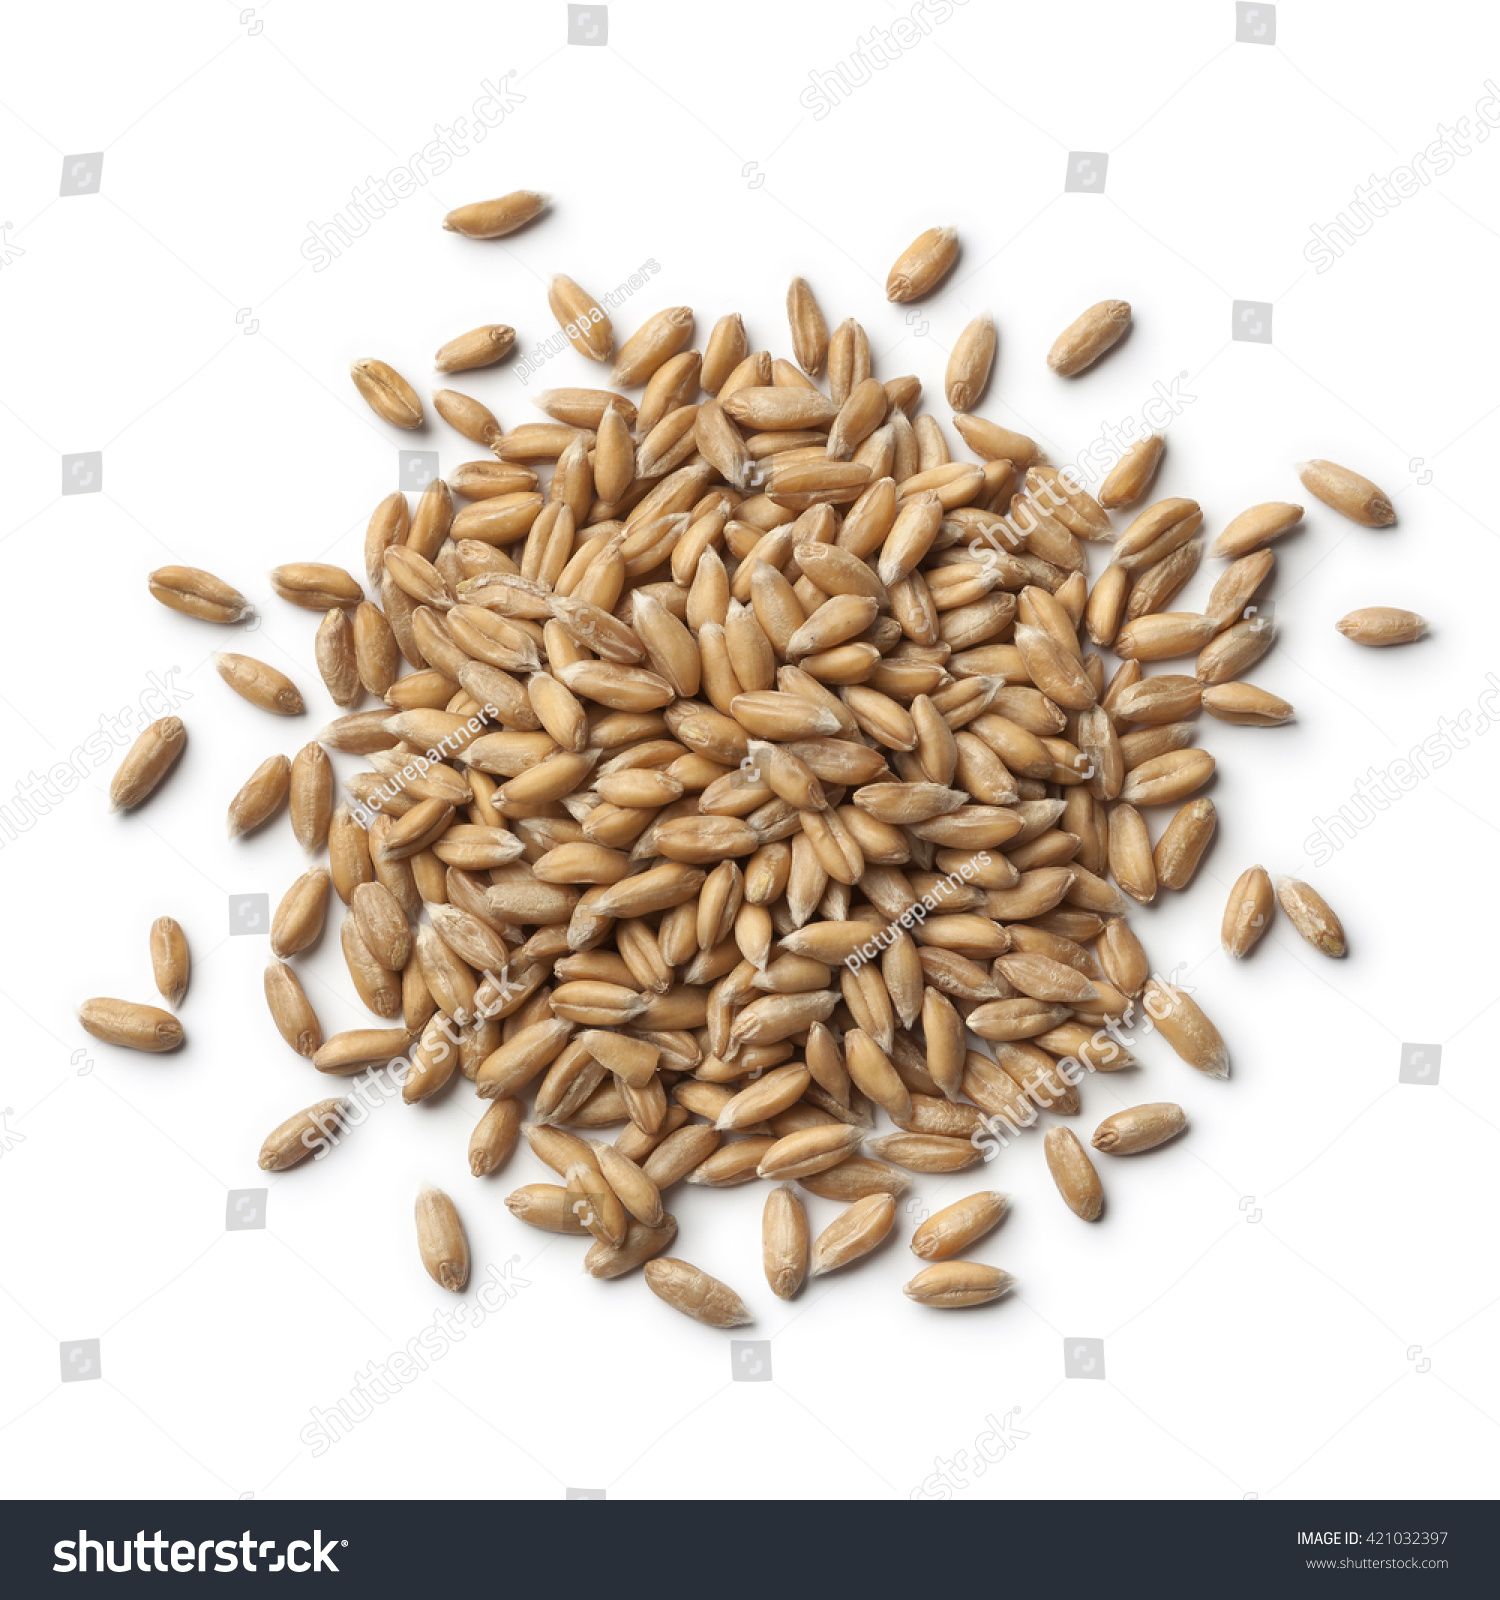 Heap of raw Spelt wheat  on white background #421032397